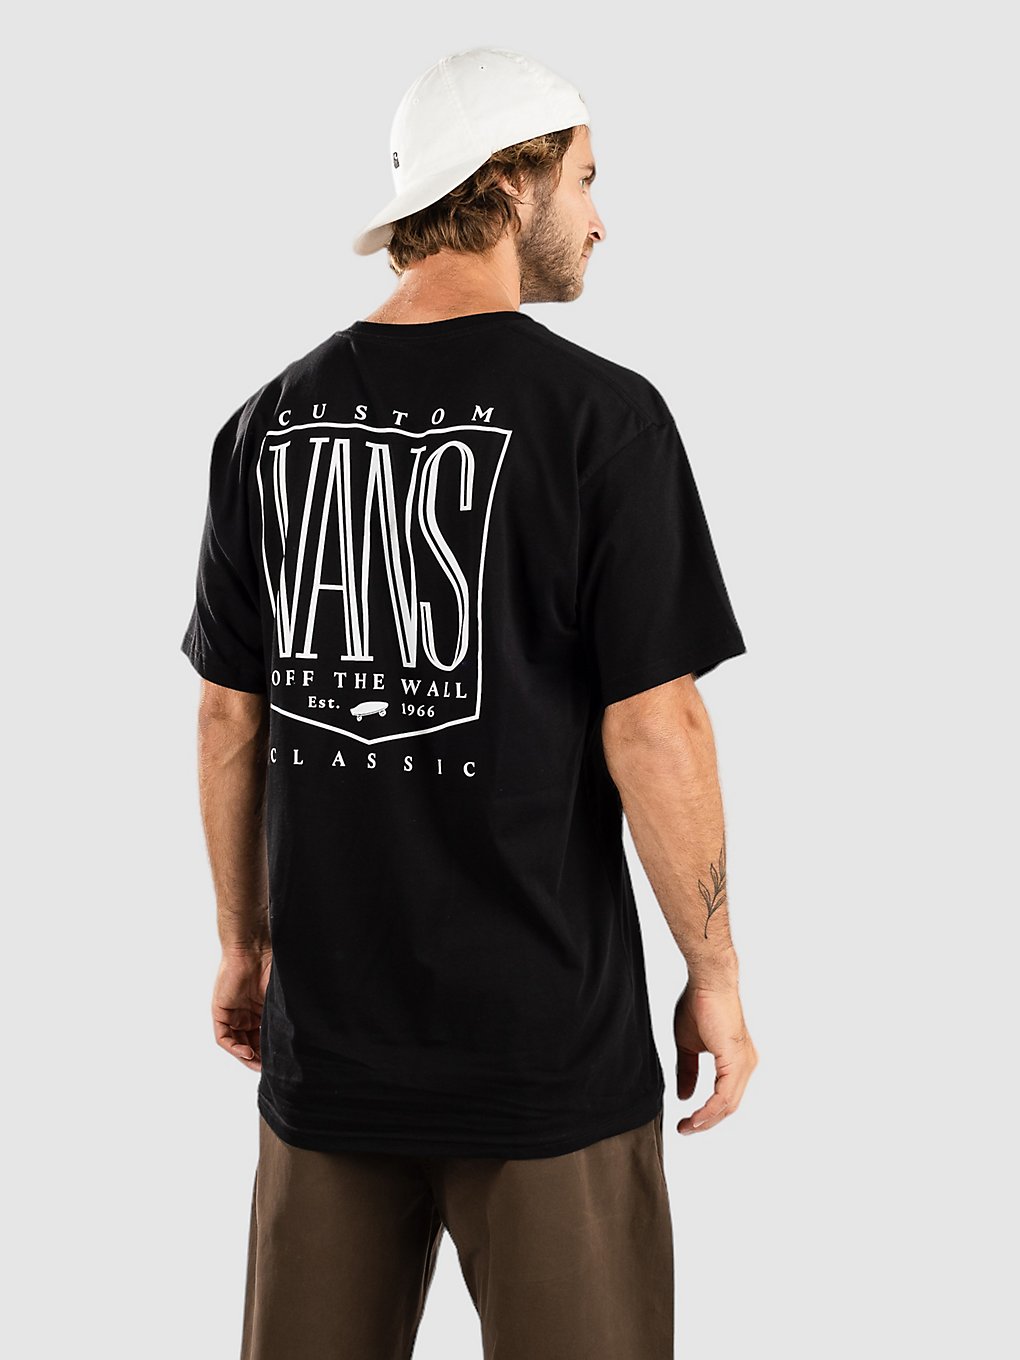 Vans Original Tall Type T-Shirt black kaufen